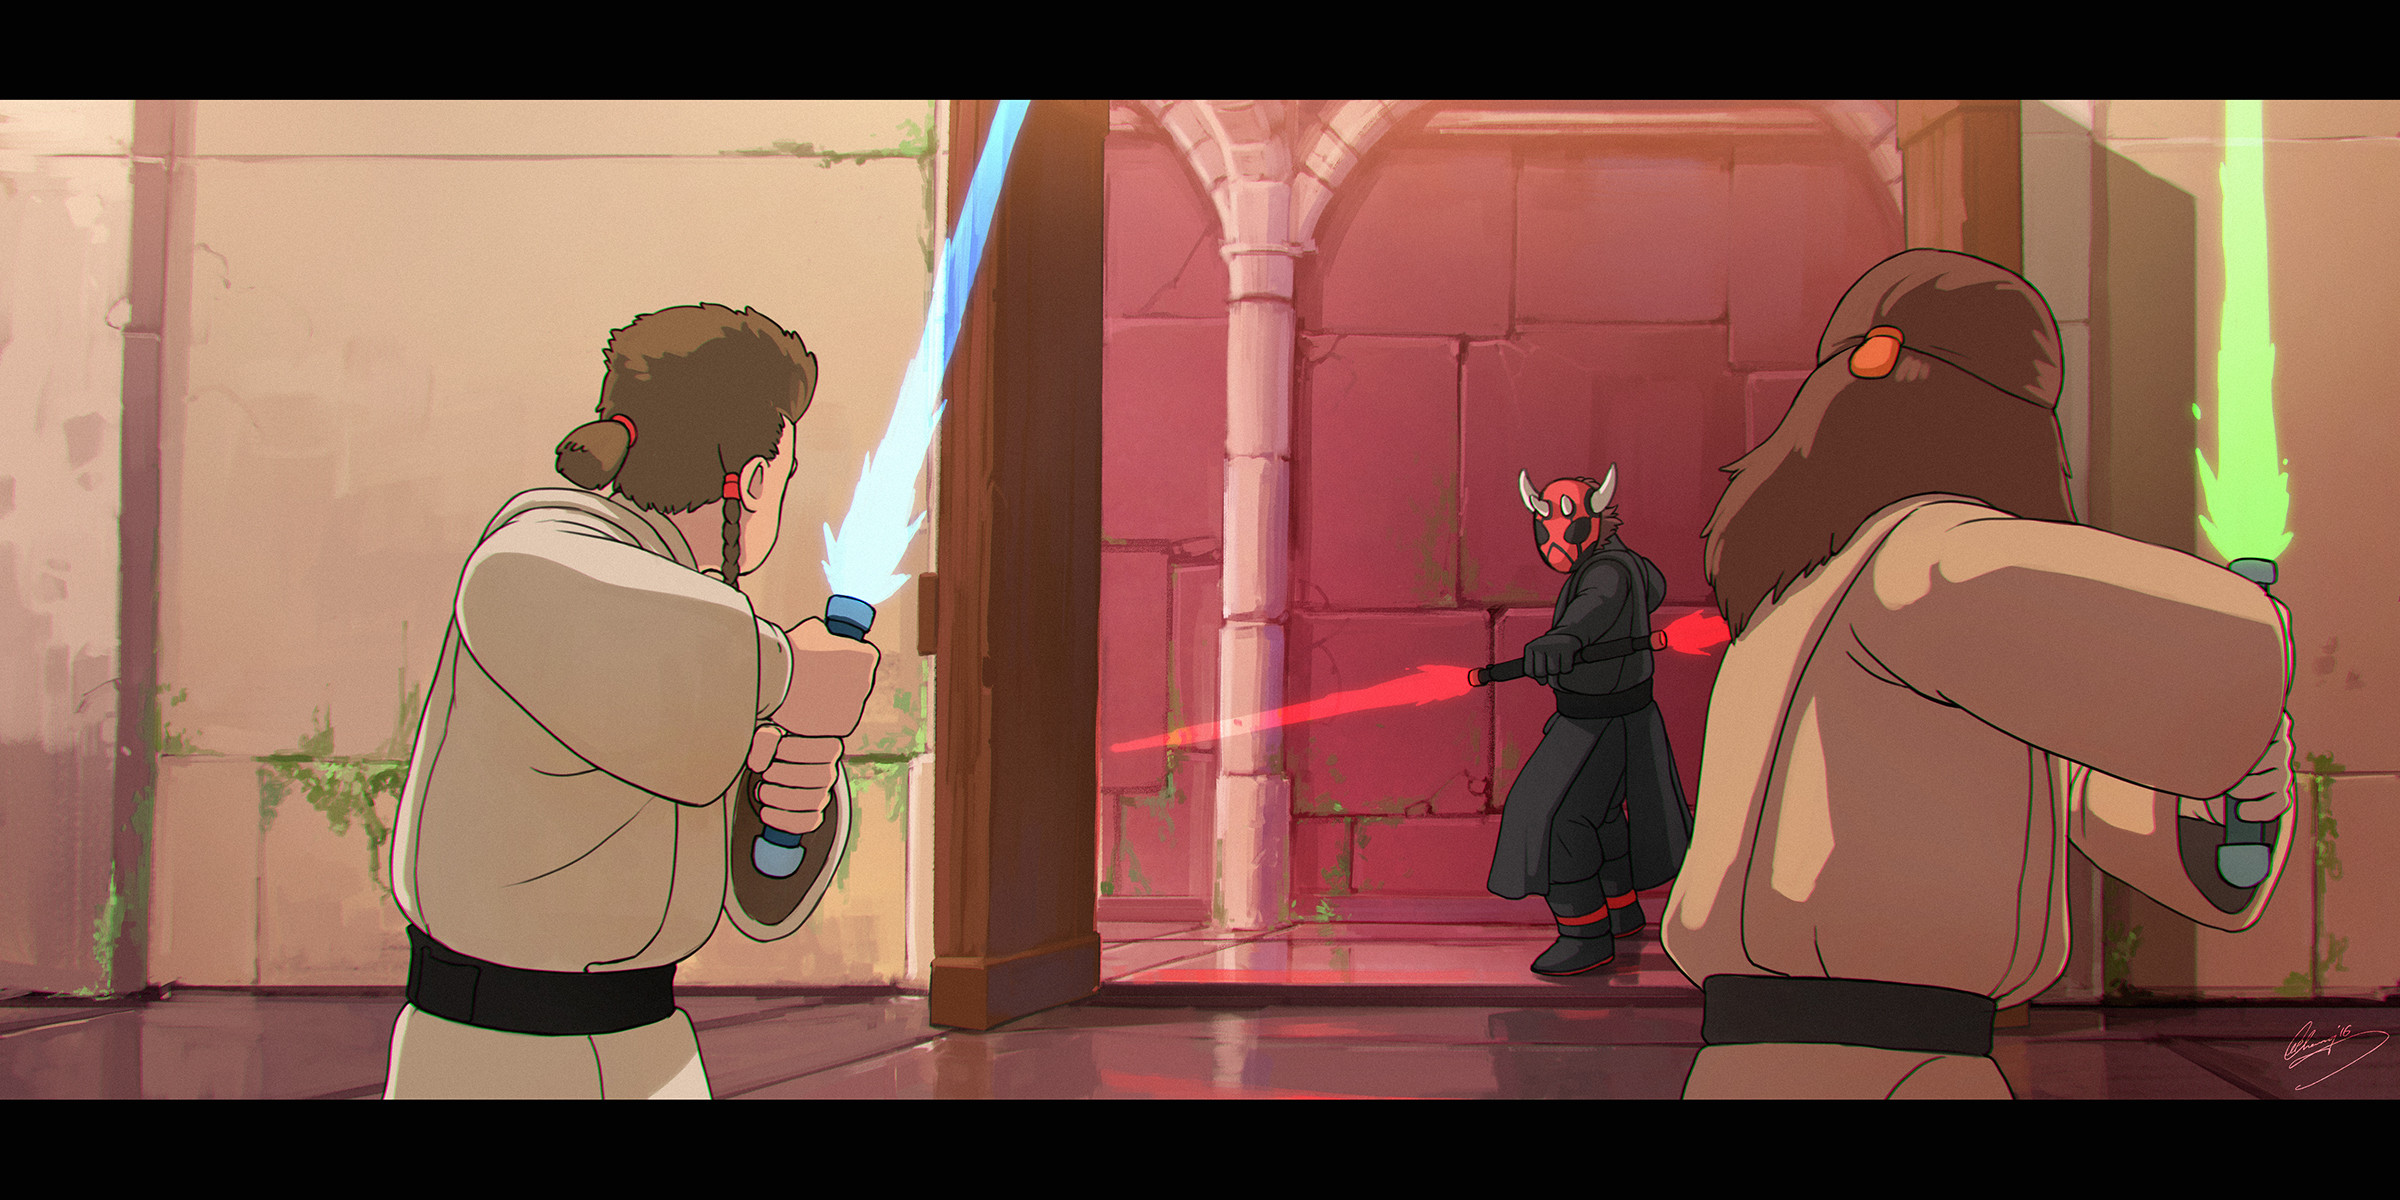 General 2400x1200 Star Wars Humor Studio Ghibli lightsaber Jedi Sith Darth Maul Obi-Wan Kenobi Qui-Gon Jinn science fiction Star Wars: Episode I - The Phantom Menace